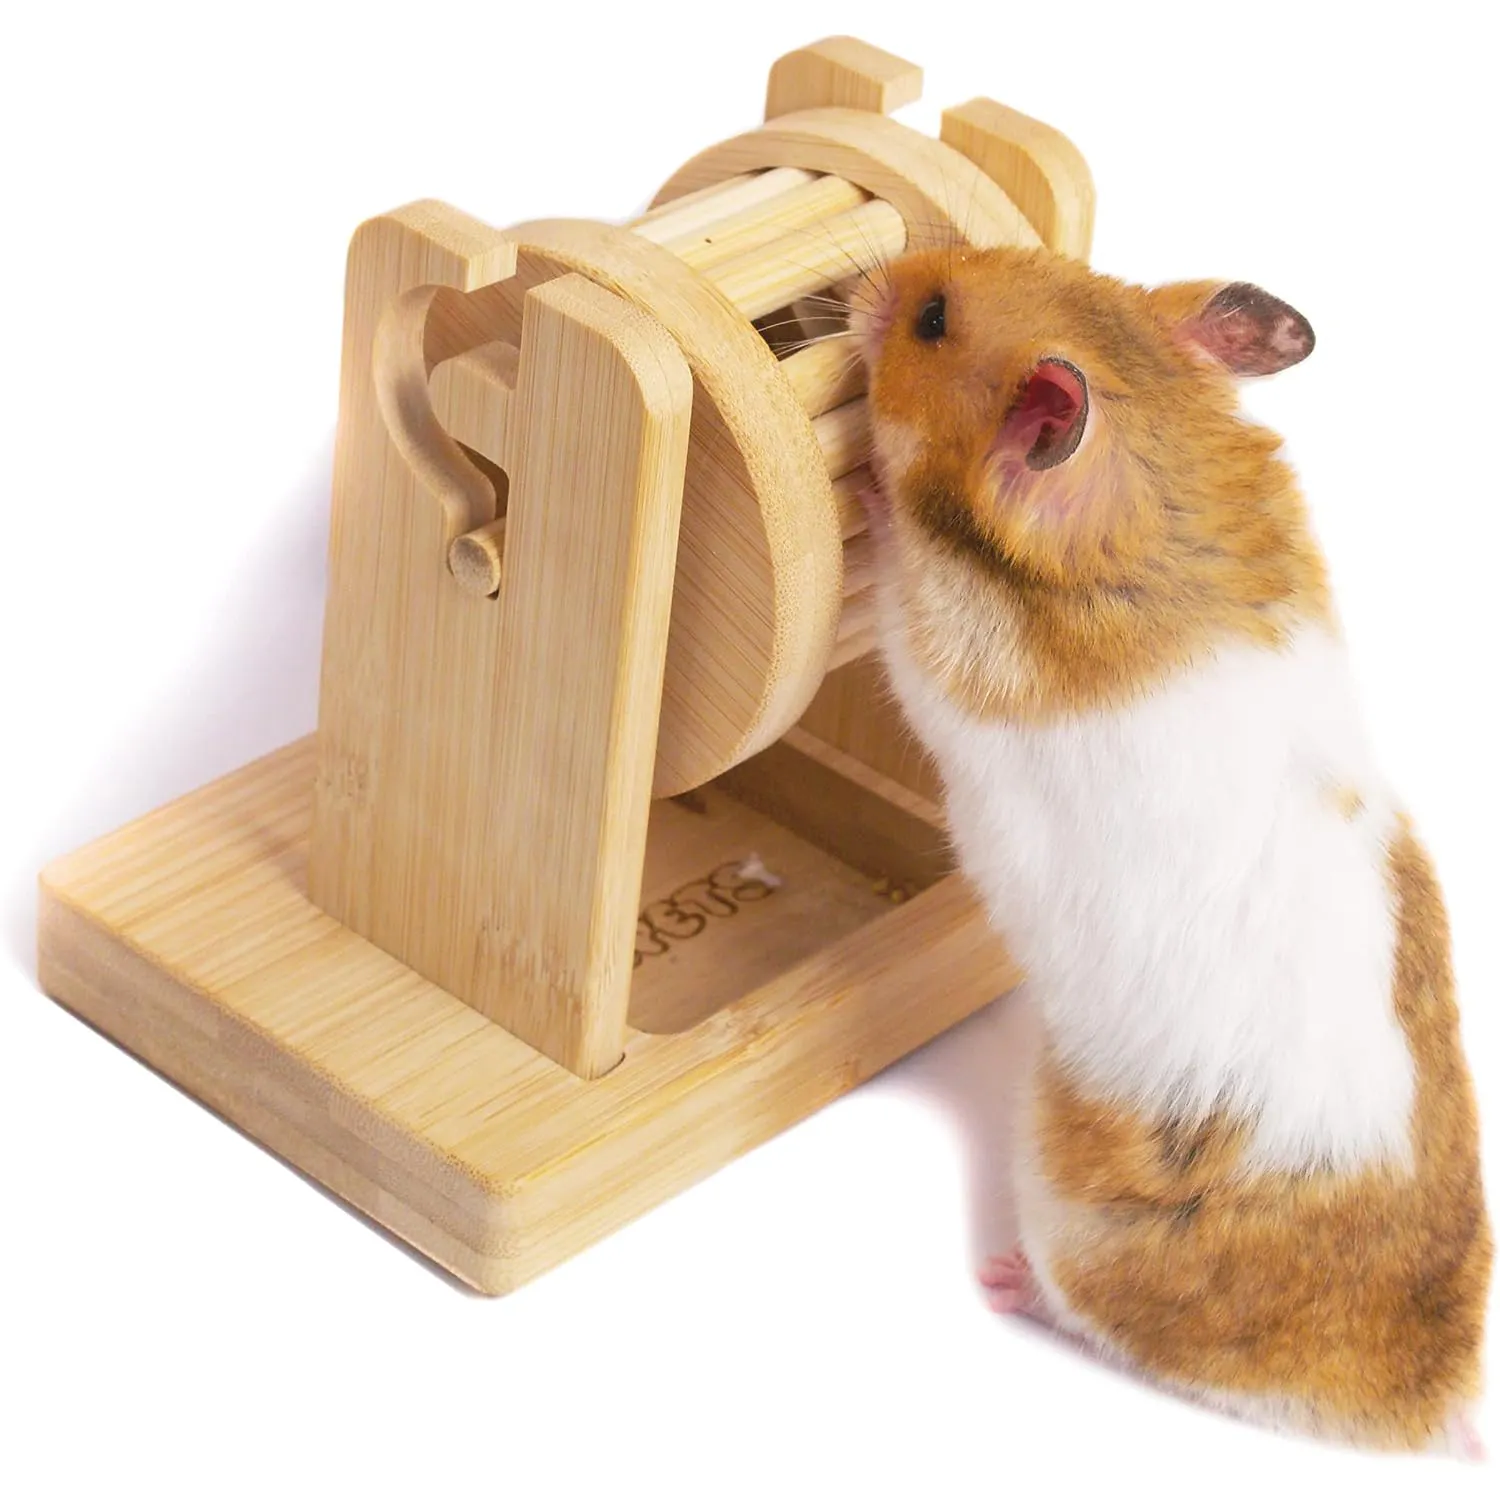 Mainan mencari makan hewan kecil interaktif untuk permainan pengintai Puzzle perawatan kulit tikus